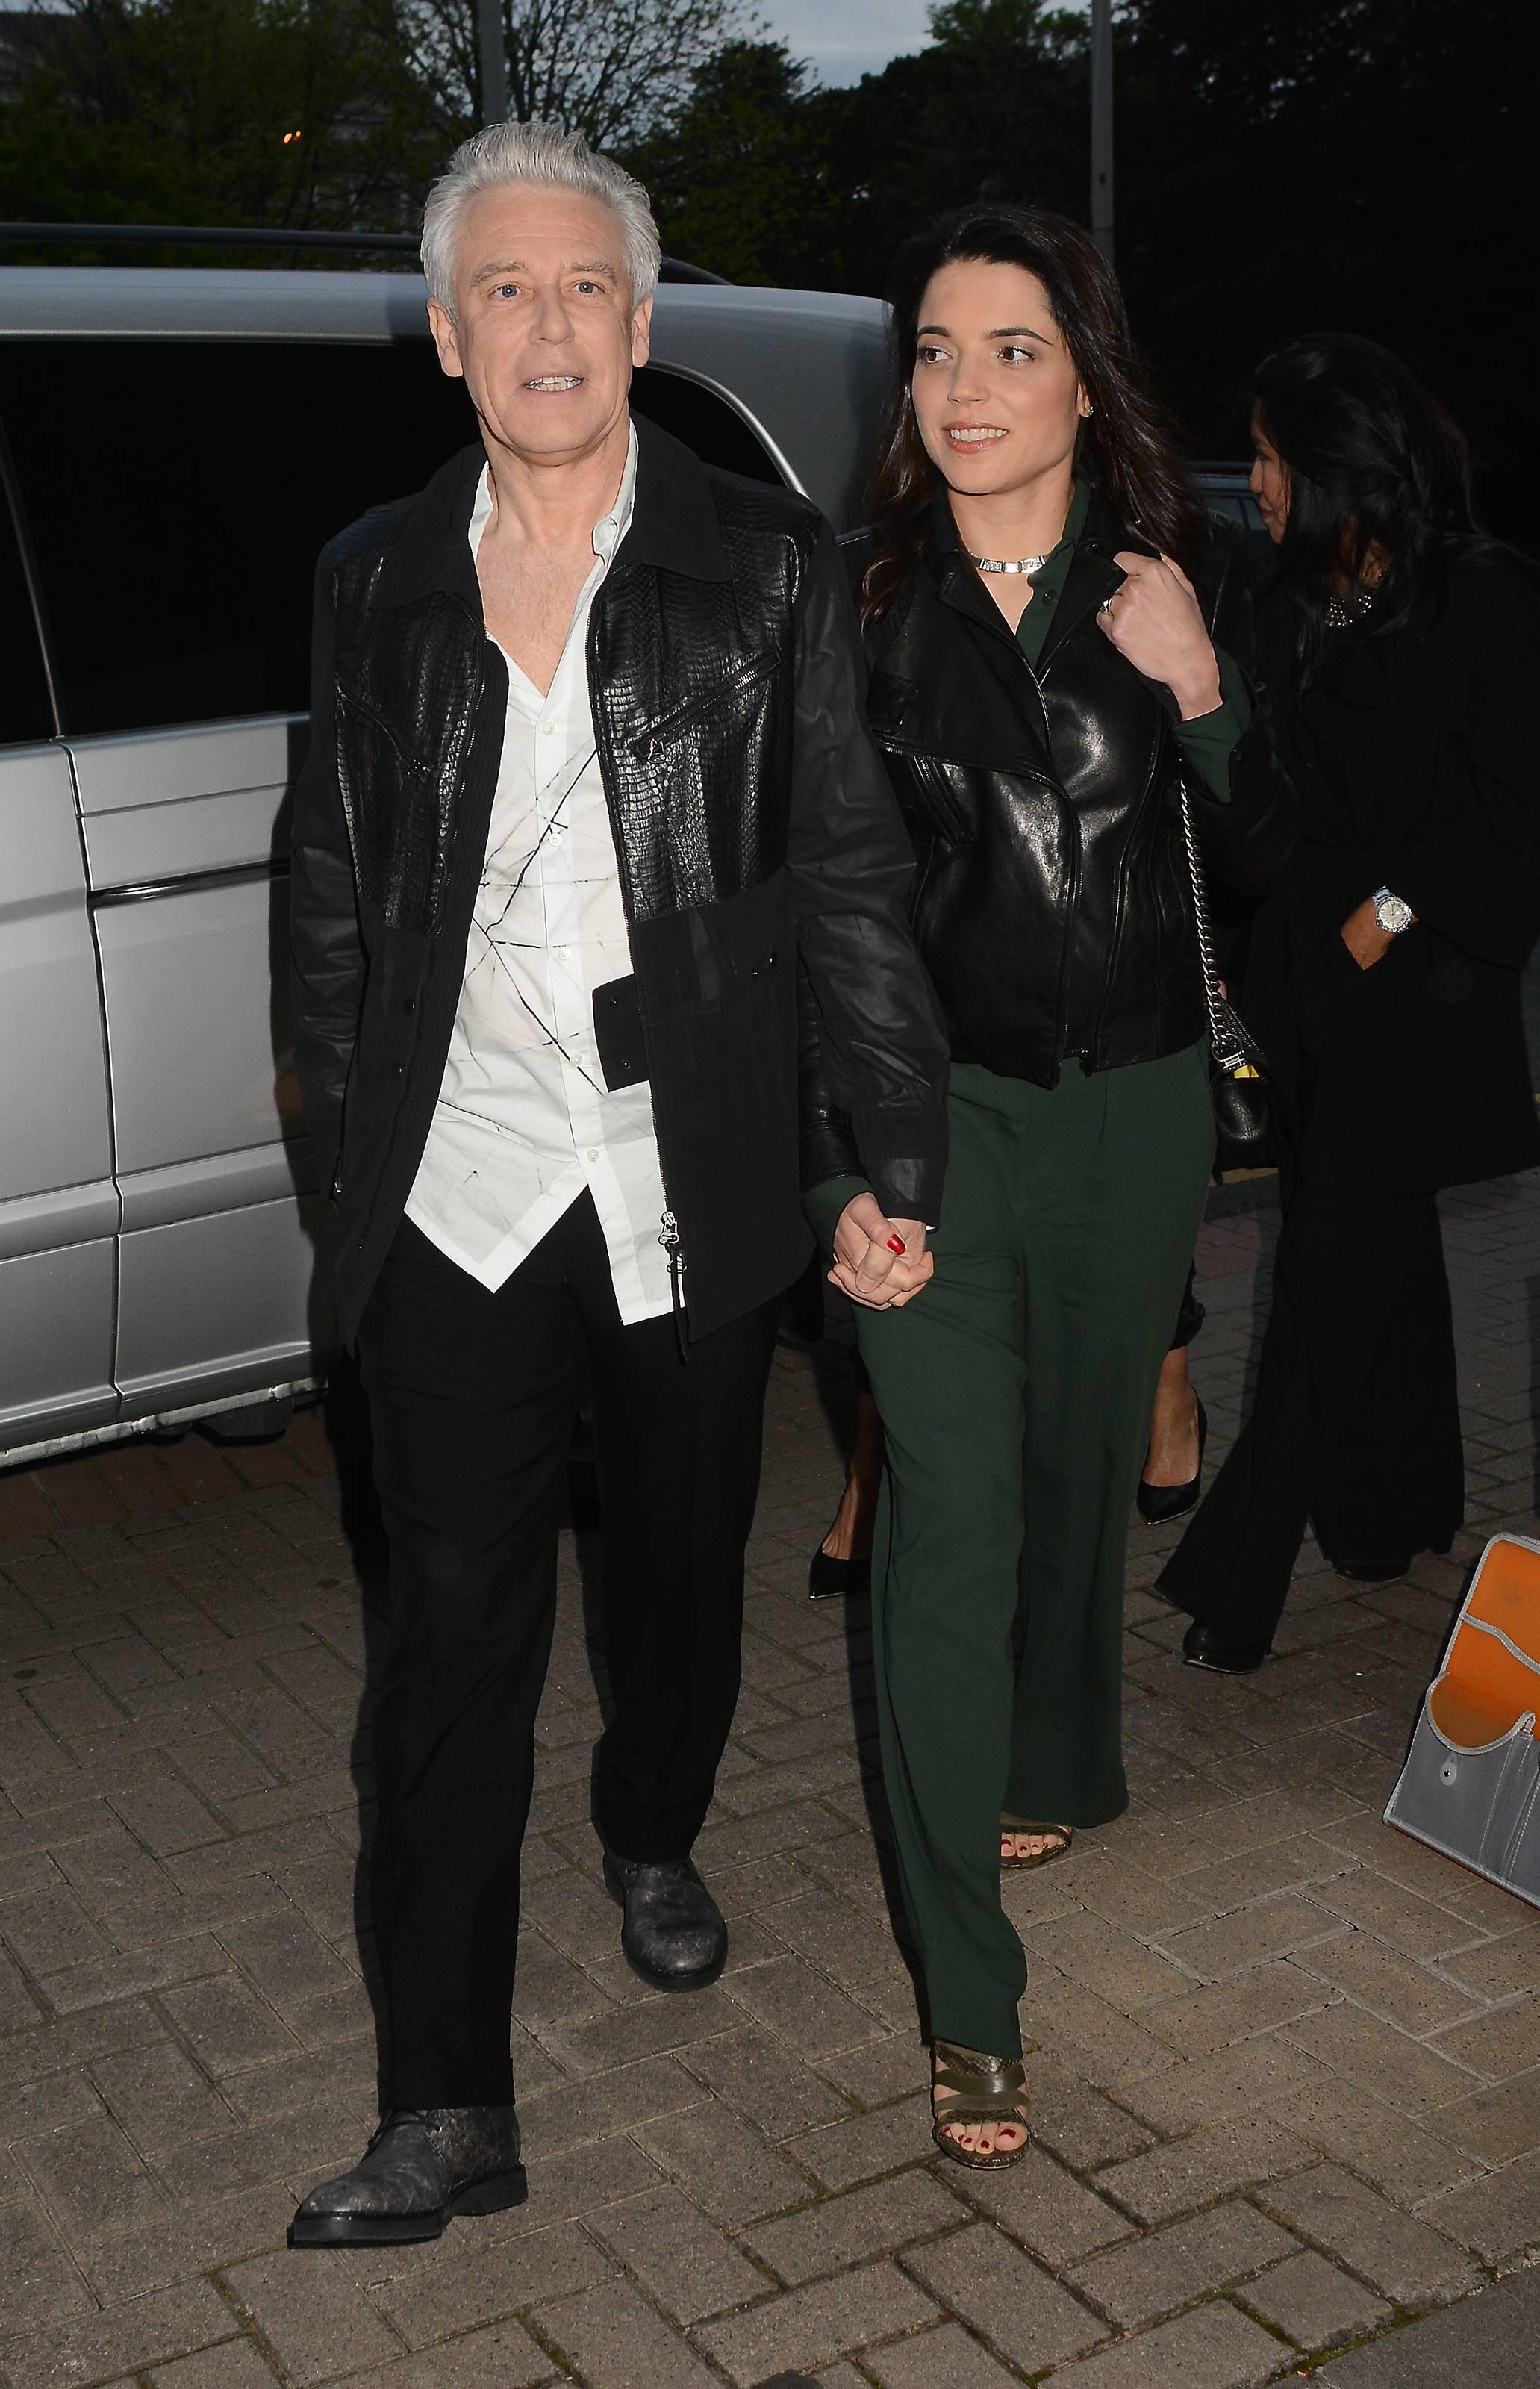 U2's Adam Clayton has split from his wife Mariana Teixeira de Carvalho